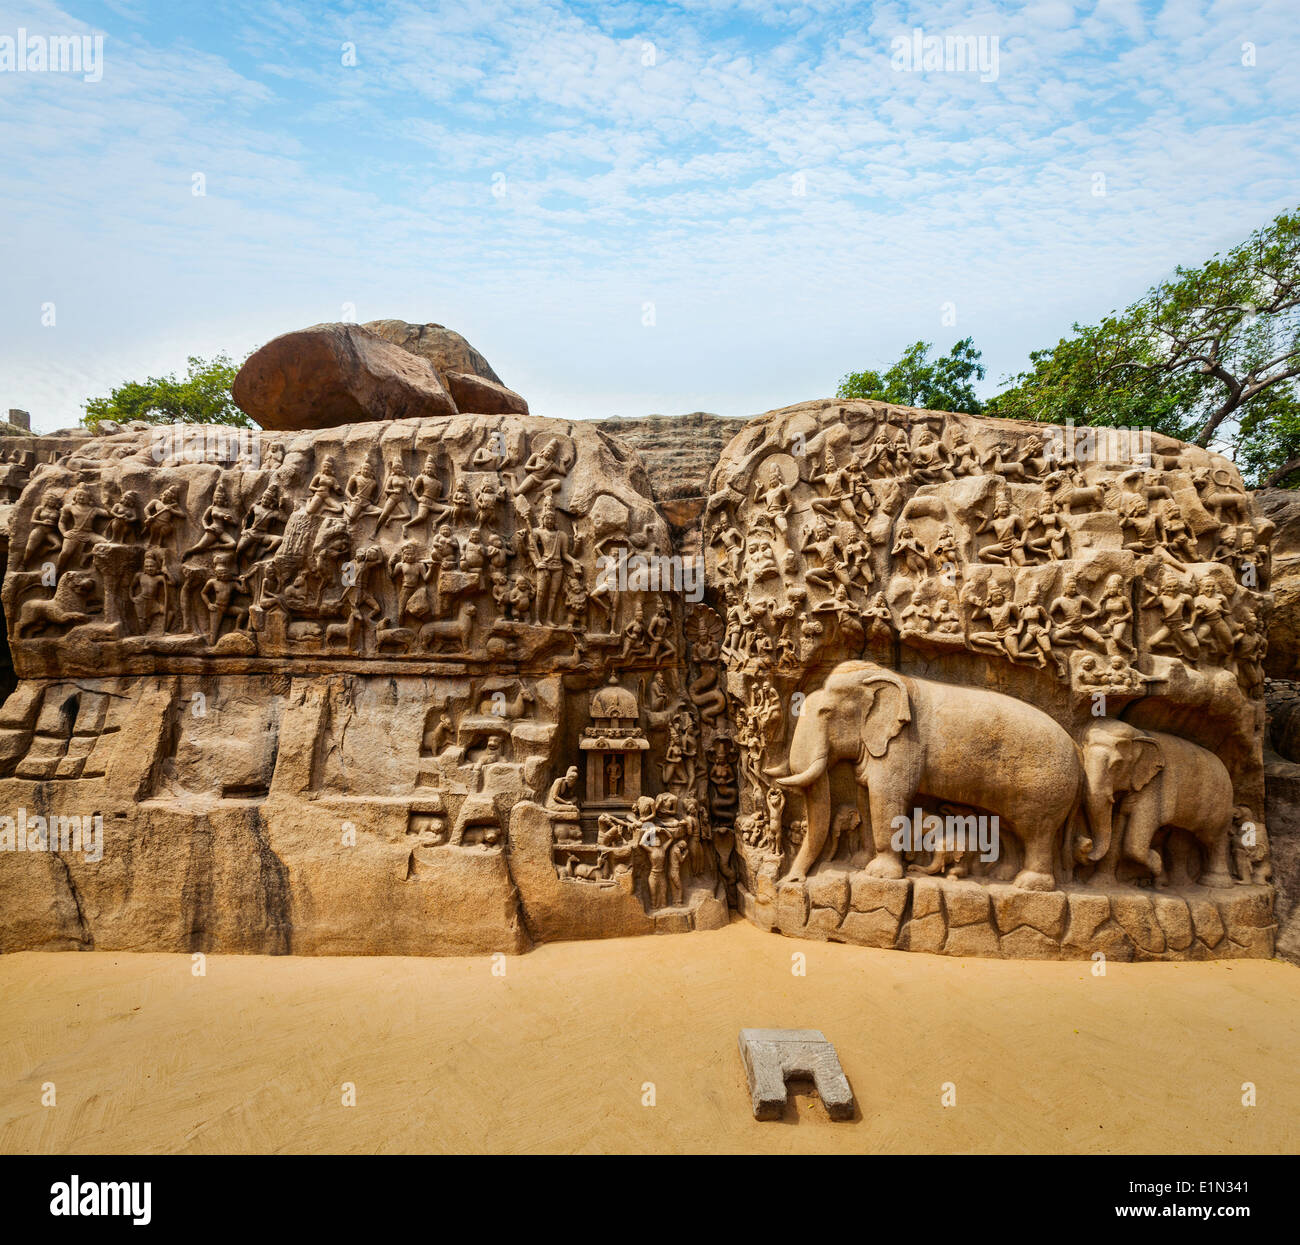 Discesa del Gange e Arjuna la Penitenza antica scultura in pietra - Monumento a Mahabalipuram, Tamil Nadu, India Foto Stock